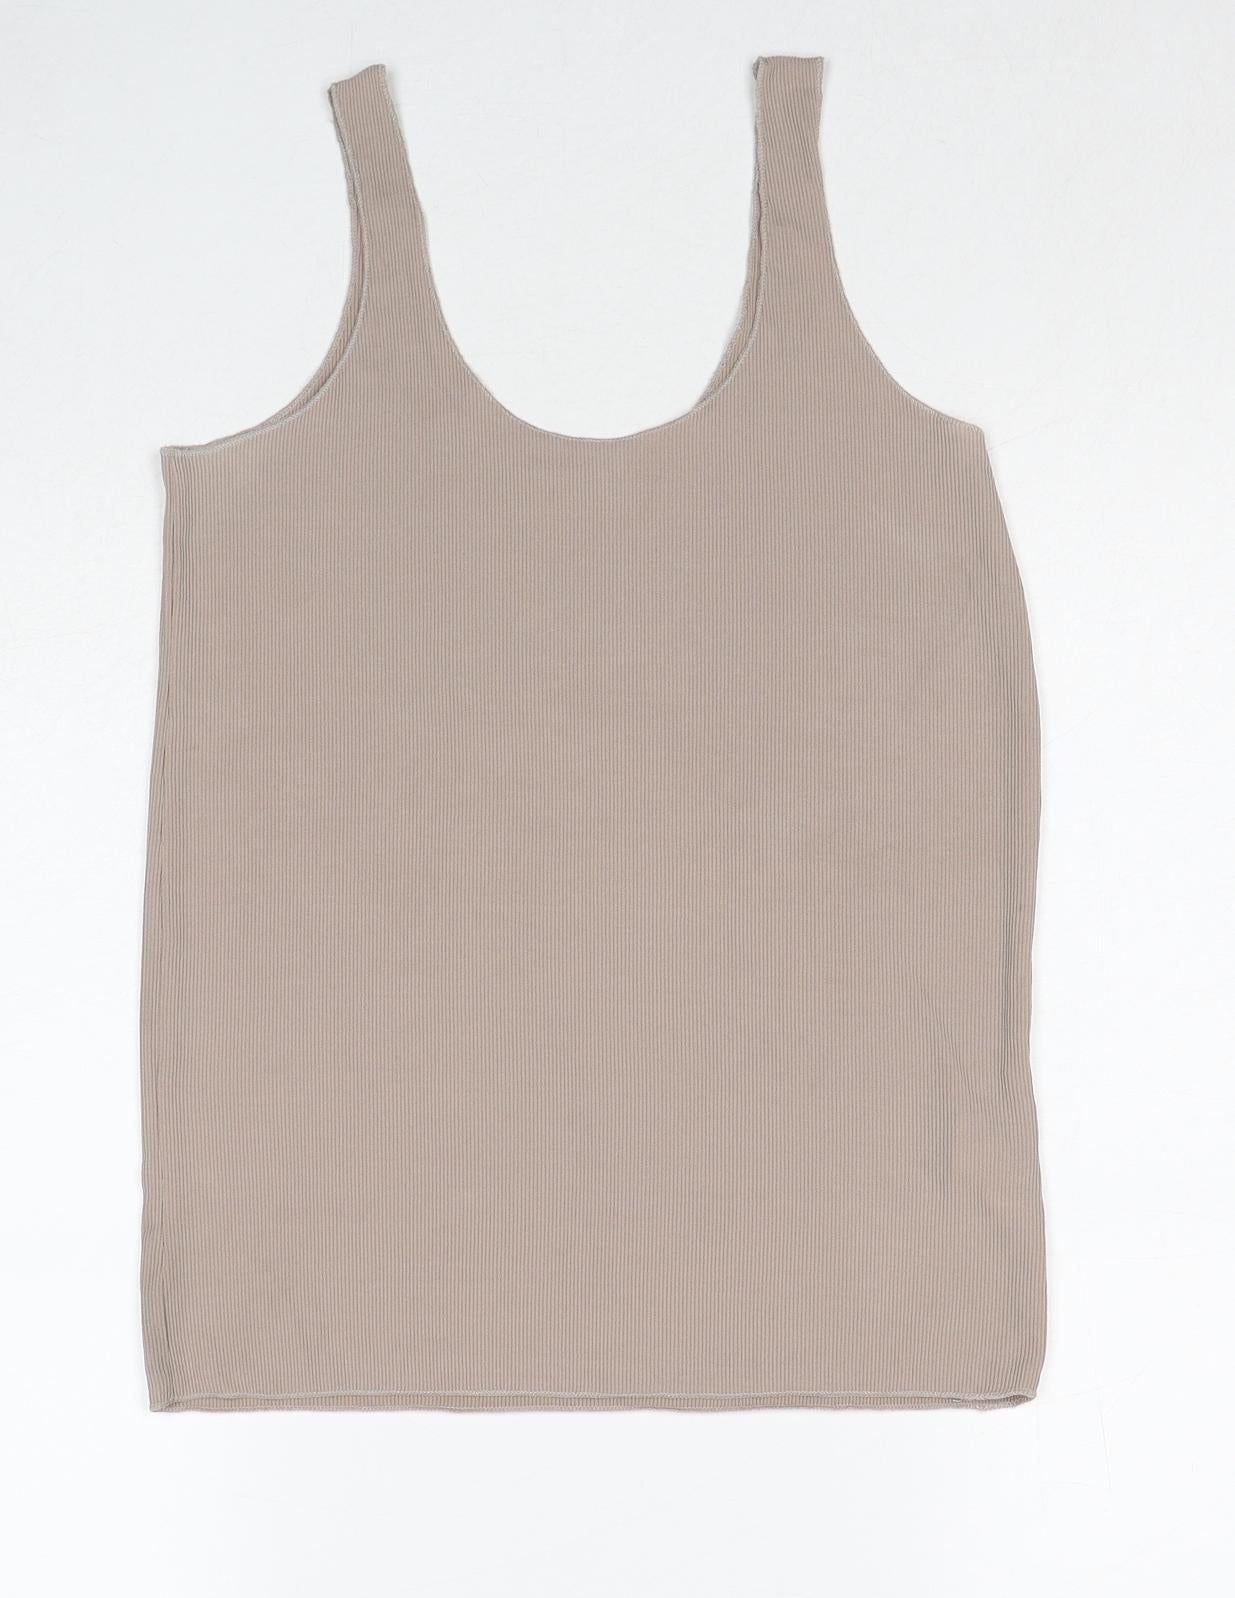 Zara Womens Beige Polyester Basic Tank Size S Round Neck